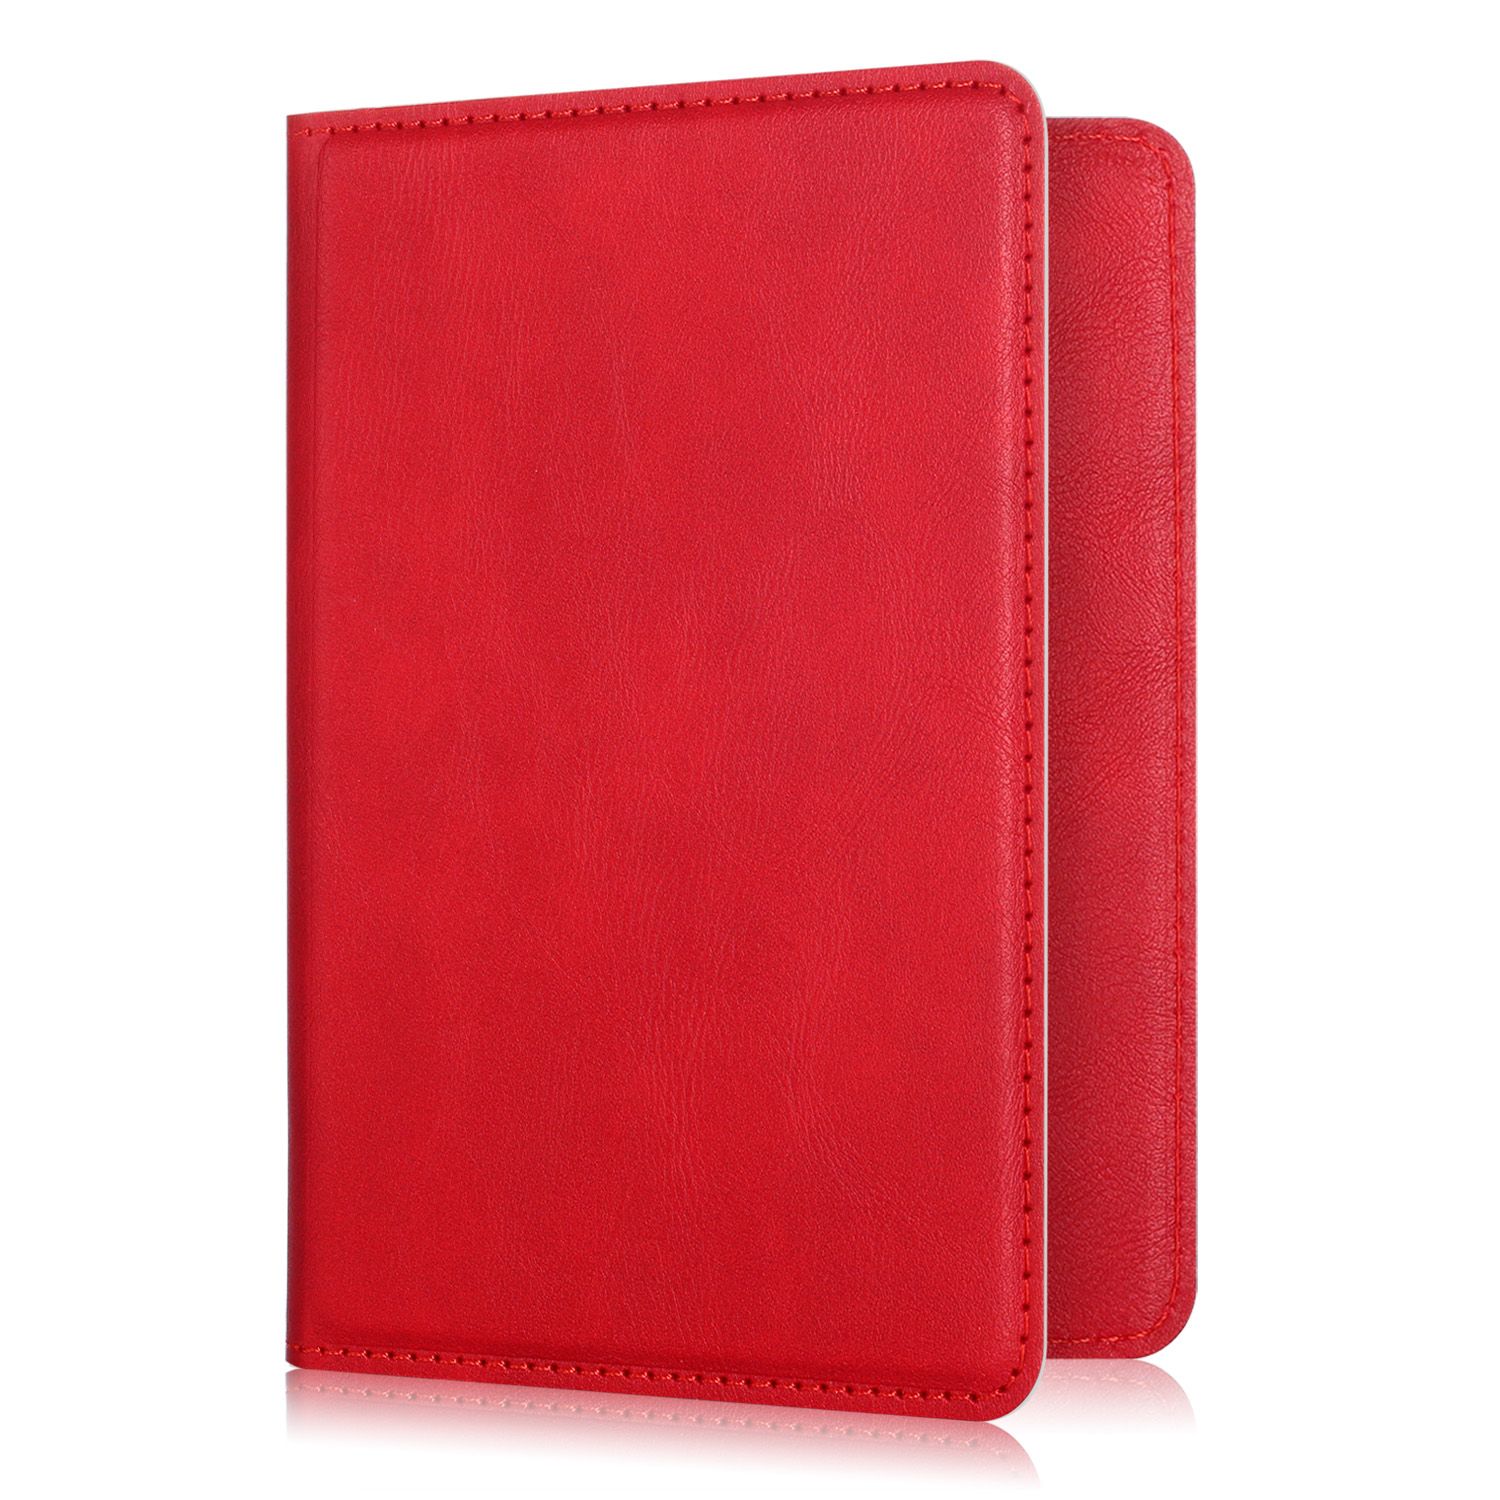 Printing-Passport-Tablet-Case---Red-1591506